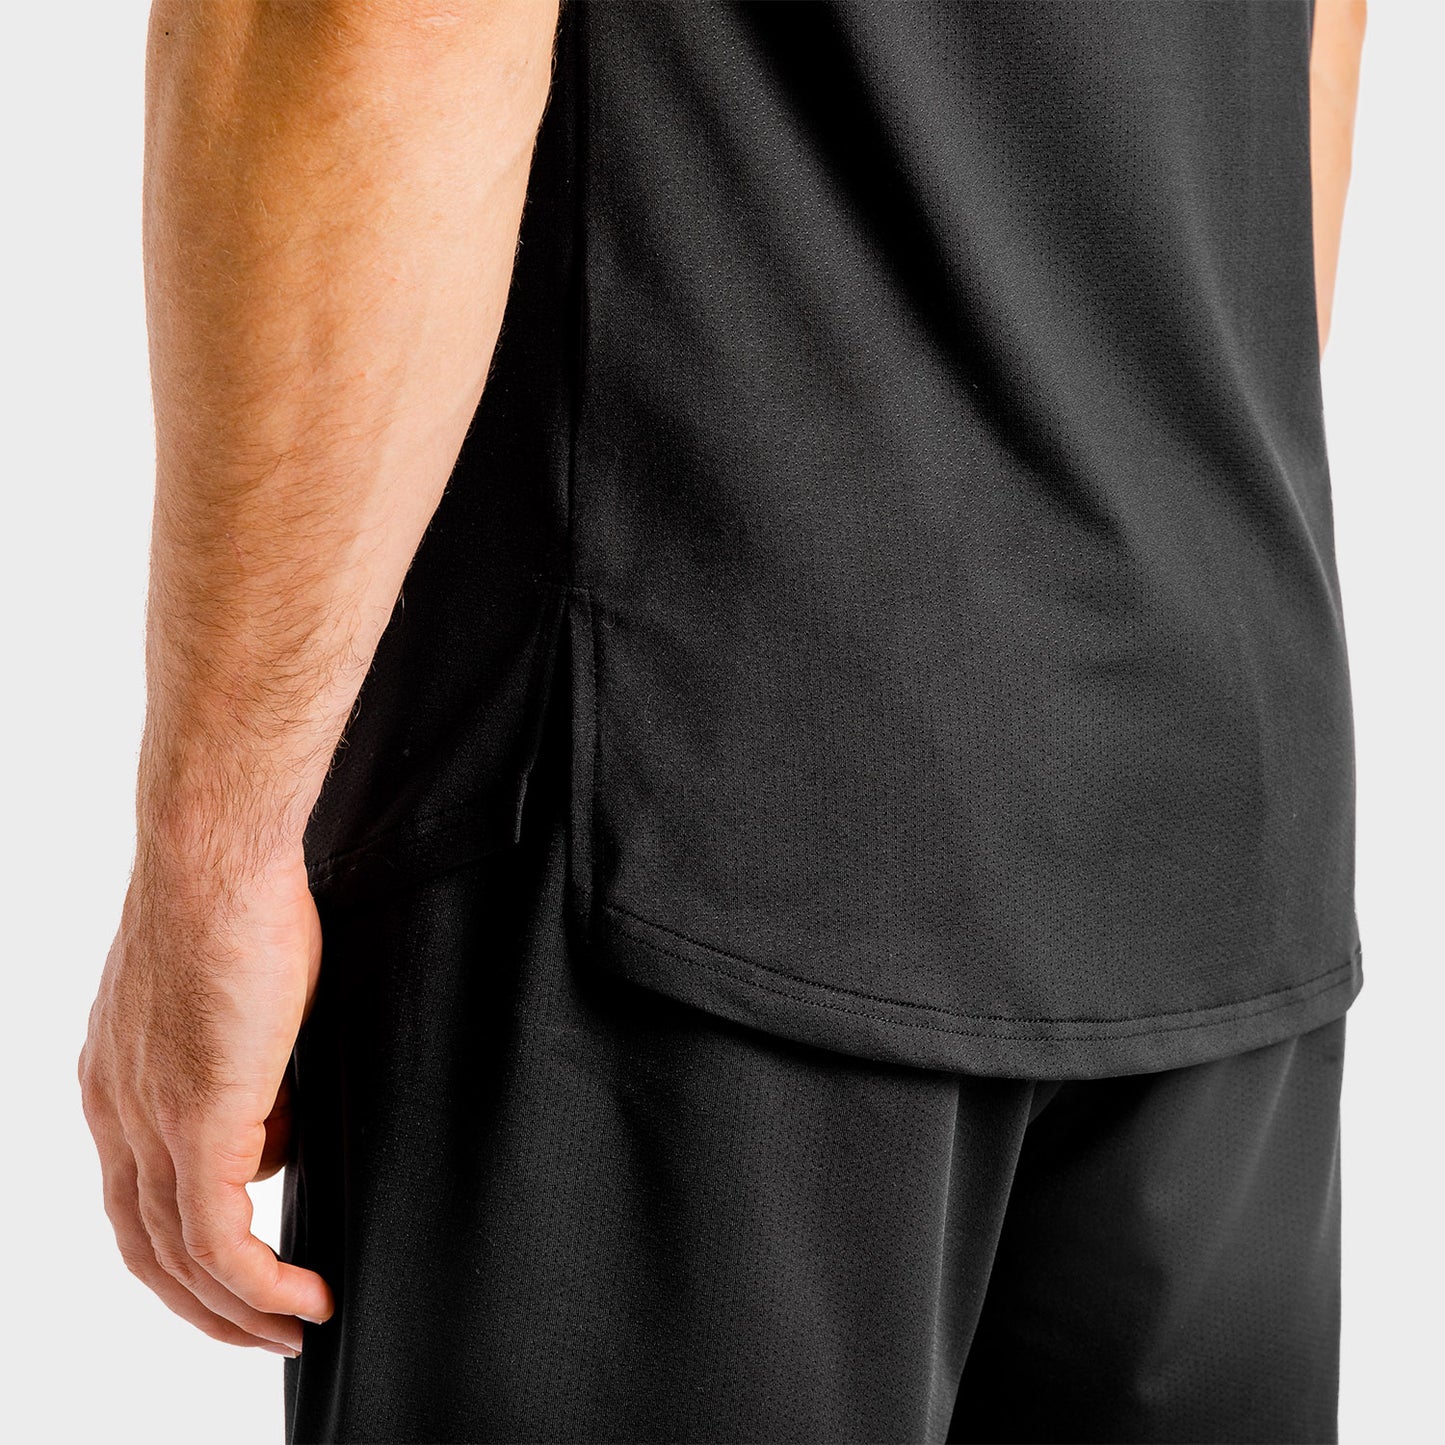 squatwolf-gym-wear-core-mesh-tee-black-workout-shirts-for-men